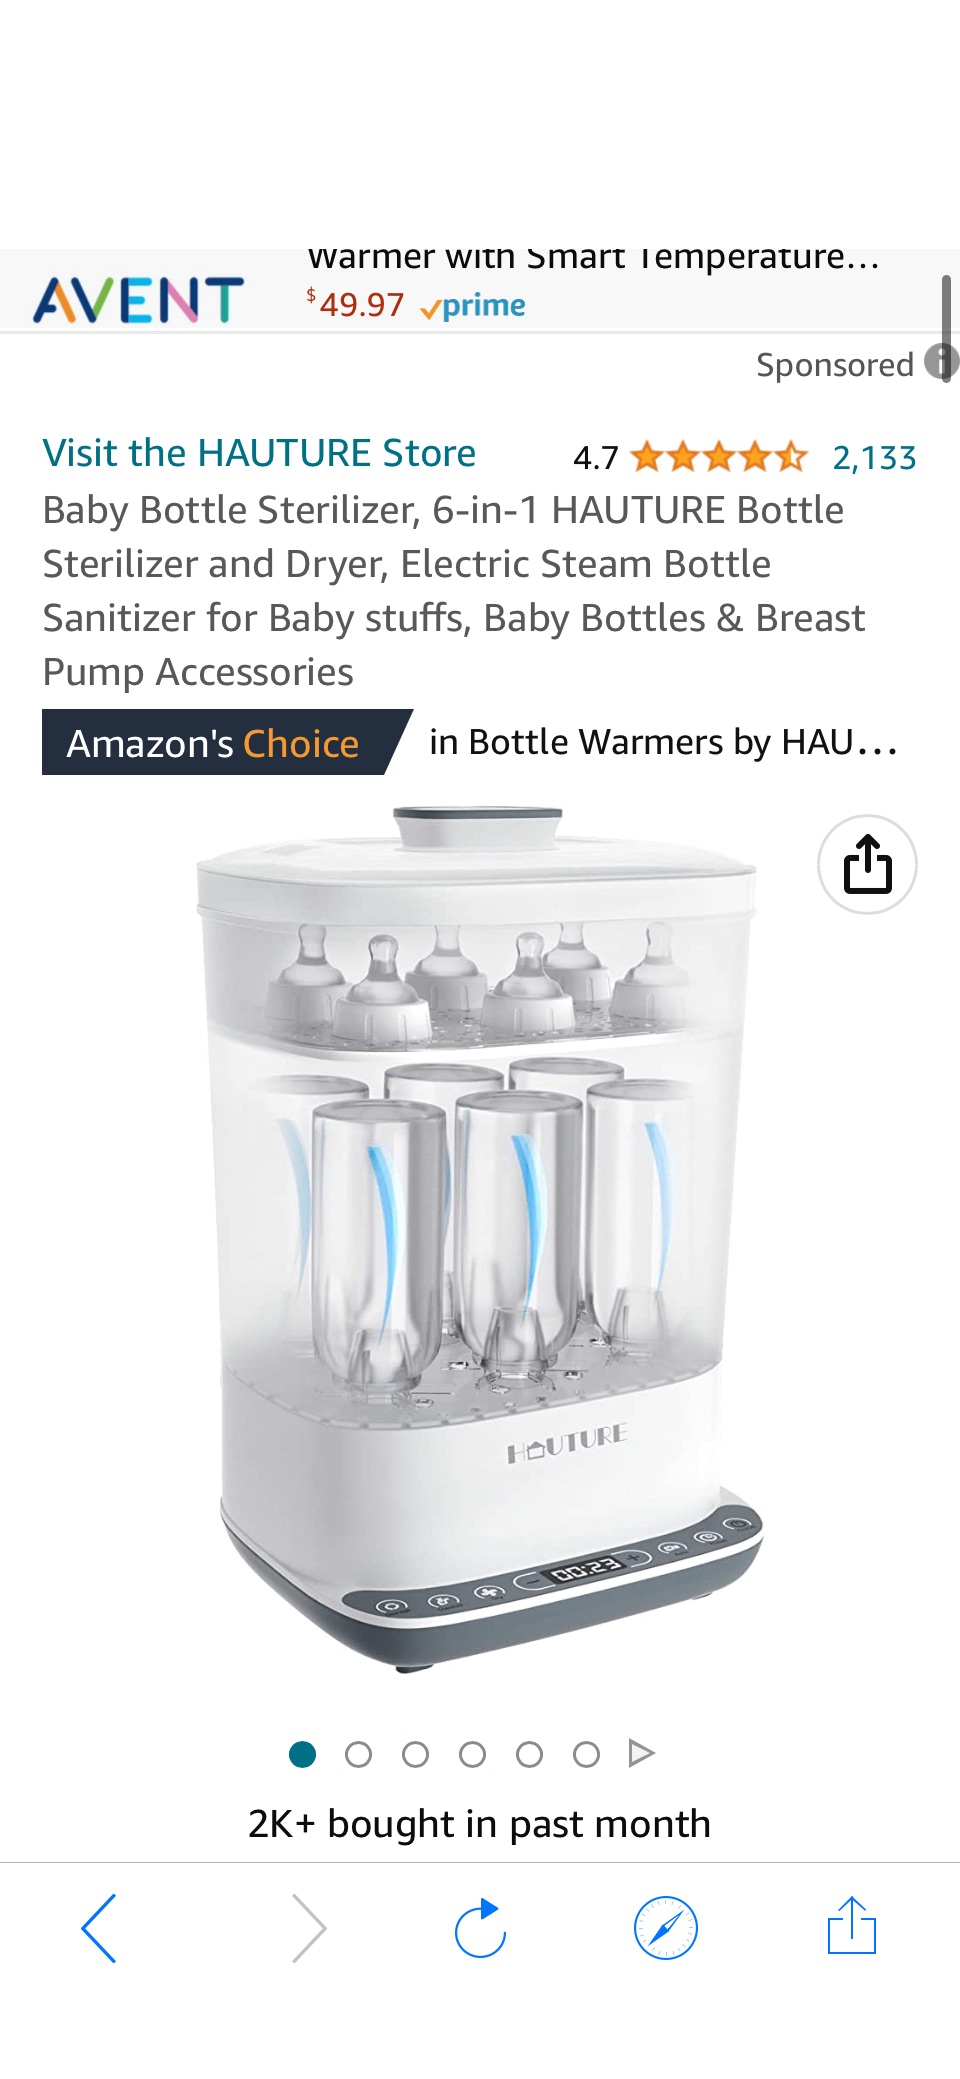 Amazon.com : Baby Bottle Sterilizer, 6-in-1 HAUTURE Bottle Sterilizer and Dryer, Electric Steam Bottle Sanitizer for Baby stuffs, Baby Bottles & Breast 原价99.99